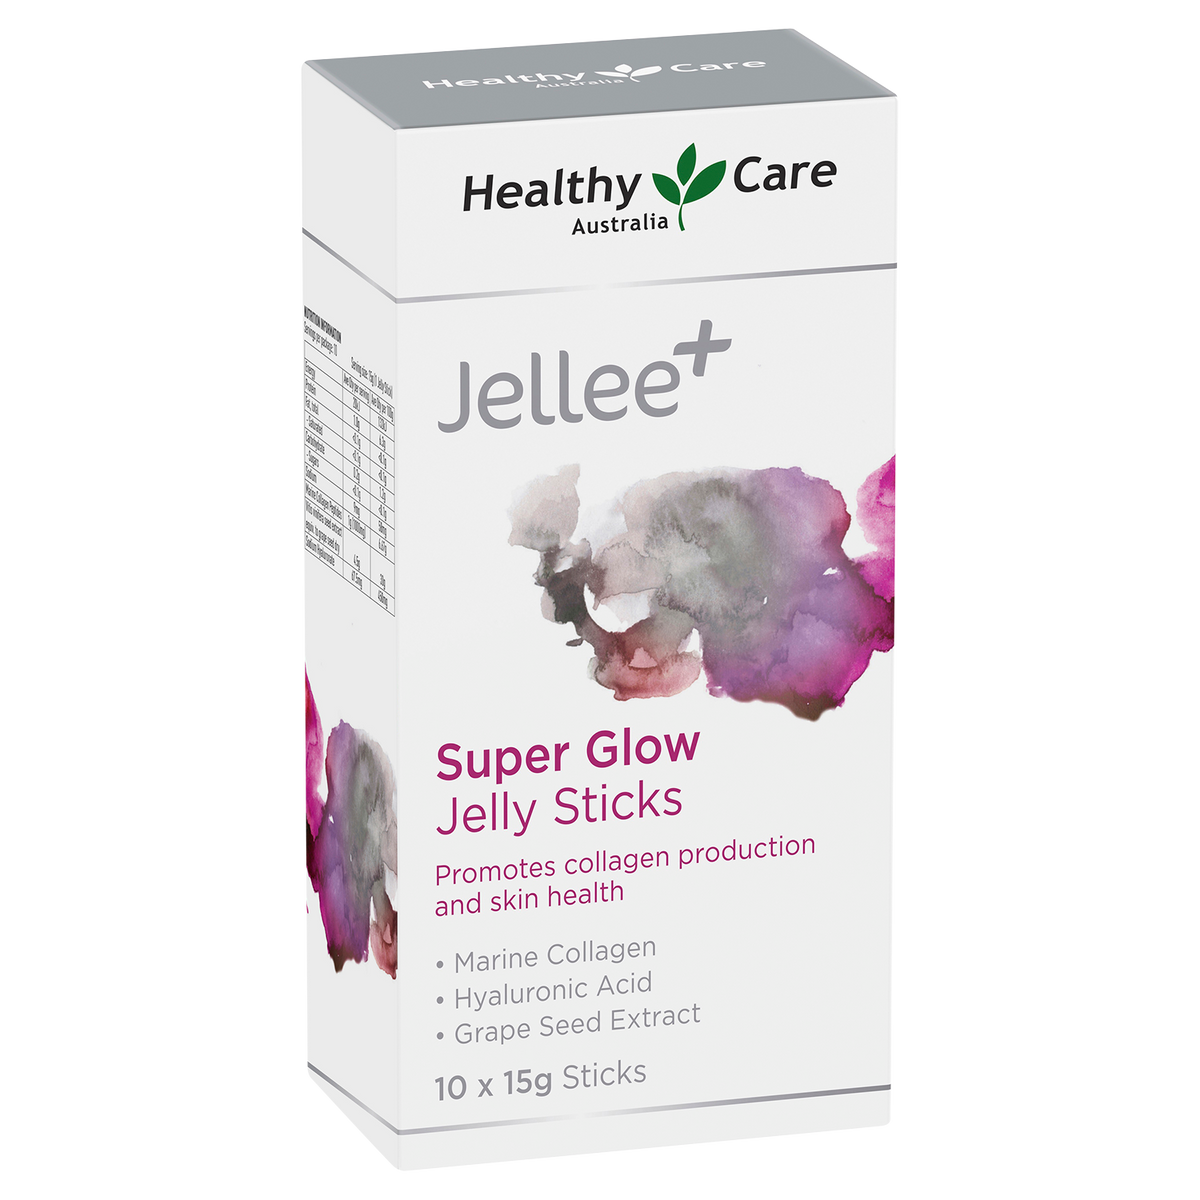 Healthy Care Jellee+ Super Glow Jelly Sticks 10 x 15g